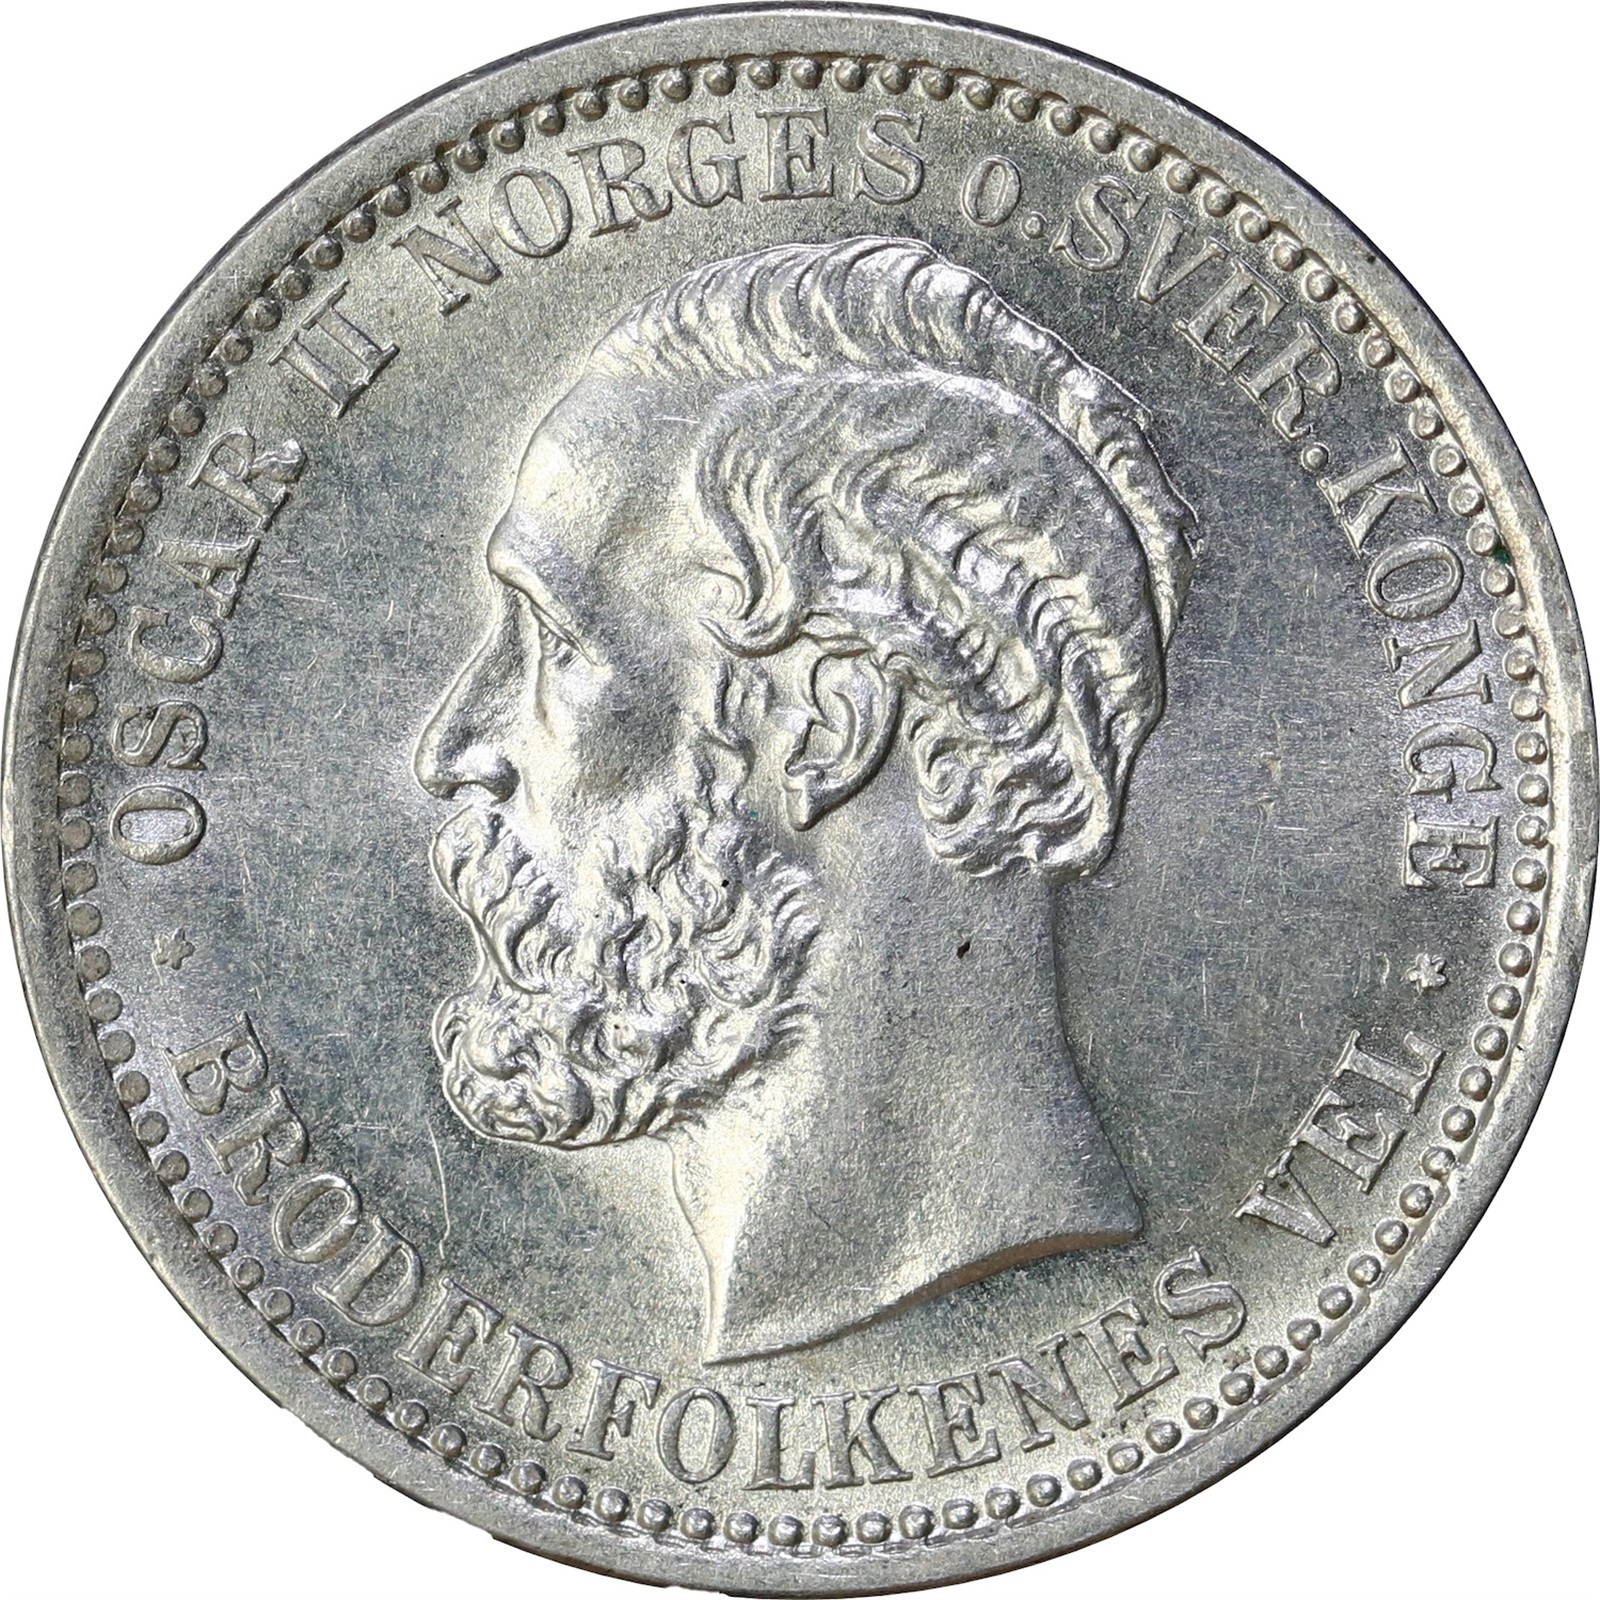 NORWAY. Oscar II. 50 Øre 1893 Kv 0 (UNC)